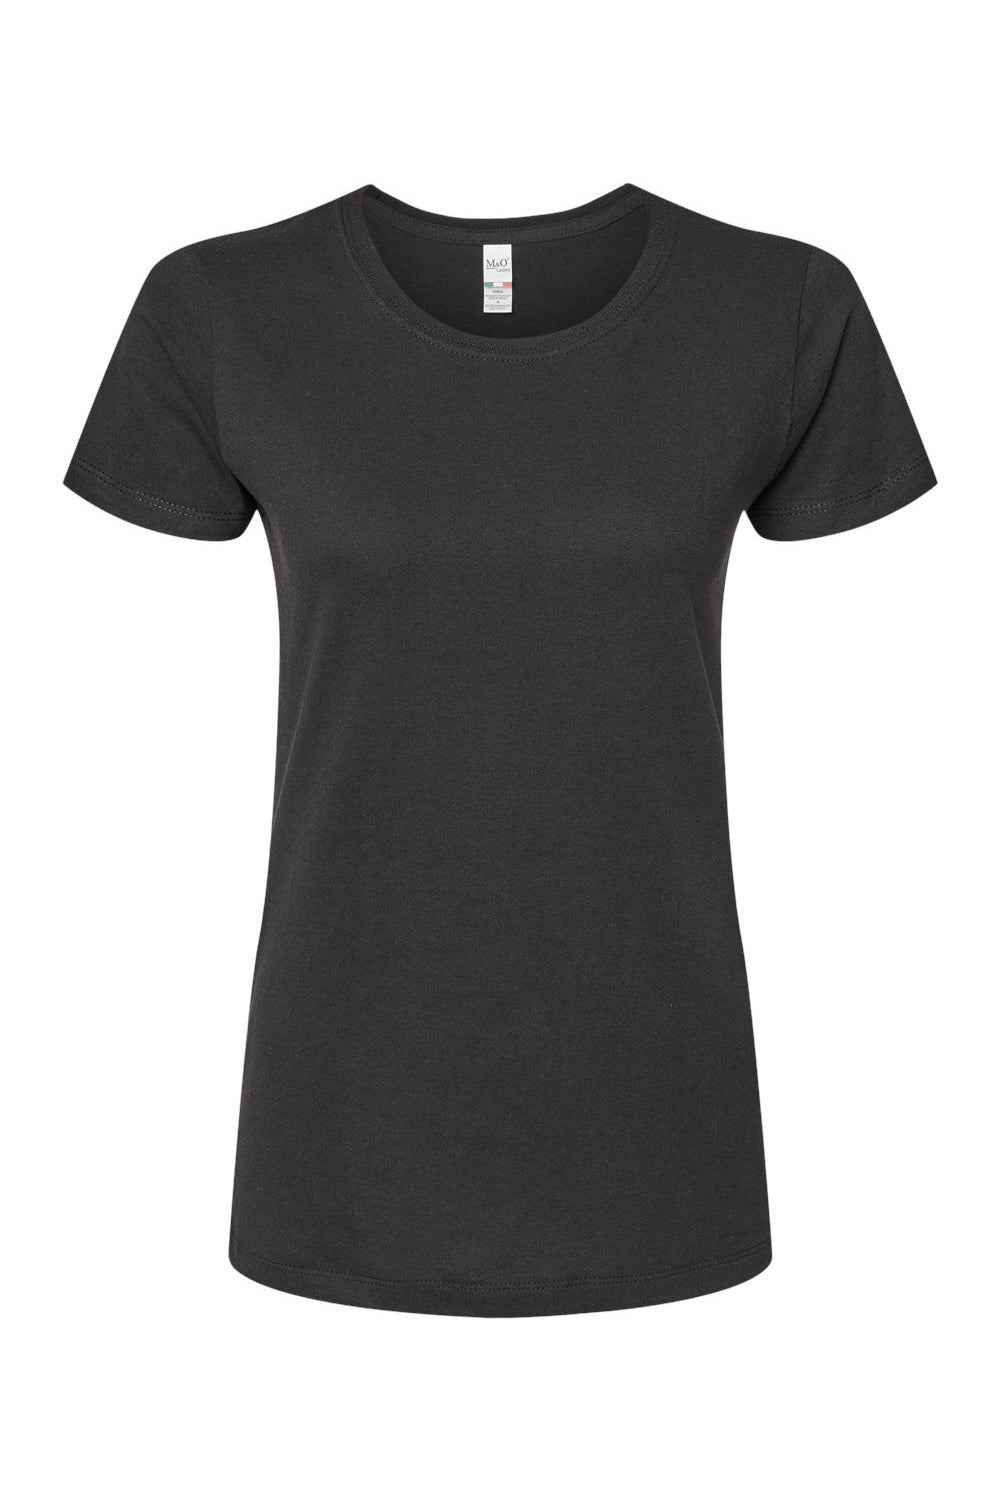 M&O 4810 Womens Gold Soft Touch Short Sleeve Crewneck T-Shirt Black Flat Front